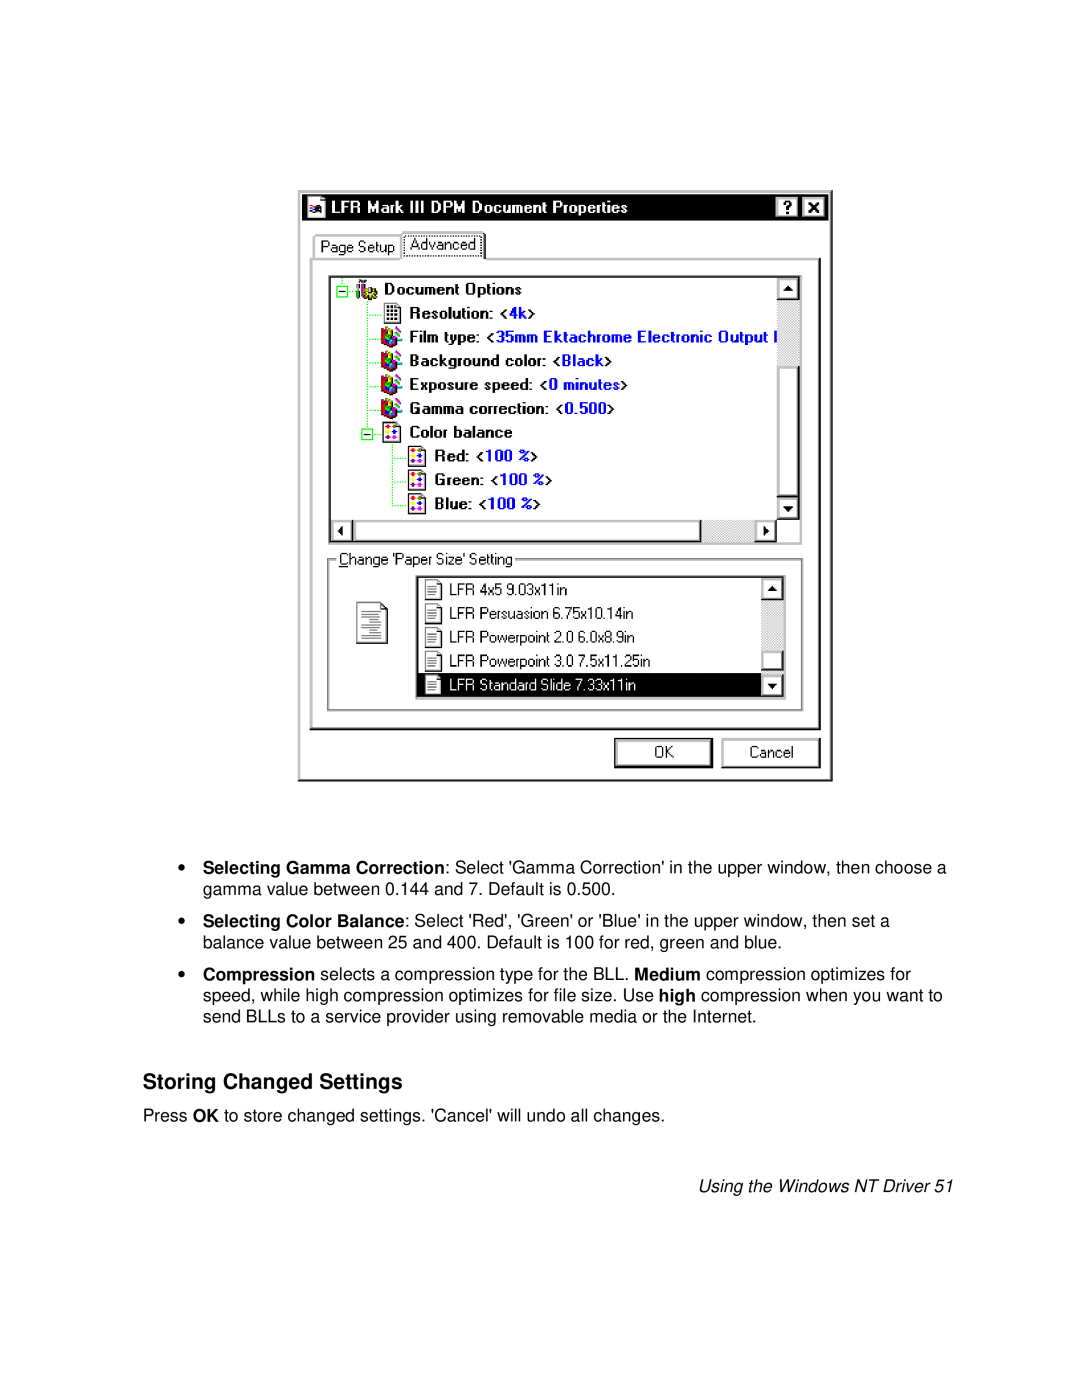 Polaroid BLL Generator manual Storing Changed Settings, Using the Windows NT Driver 